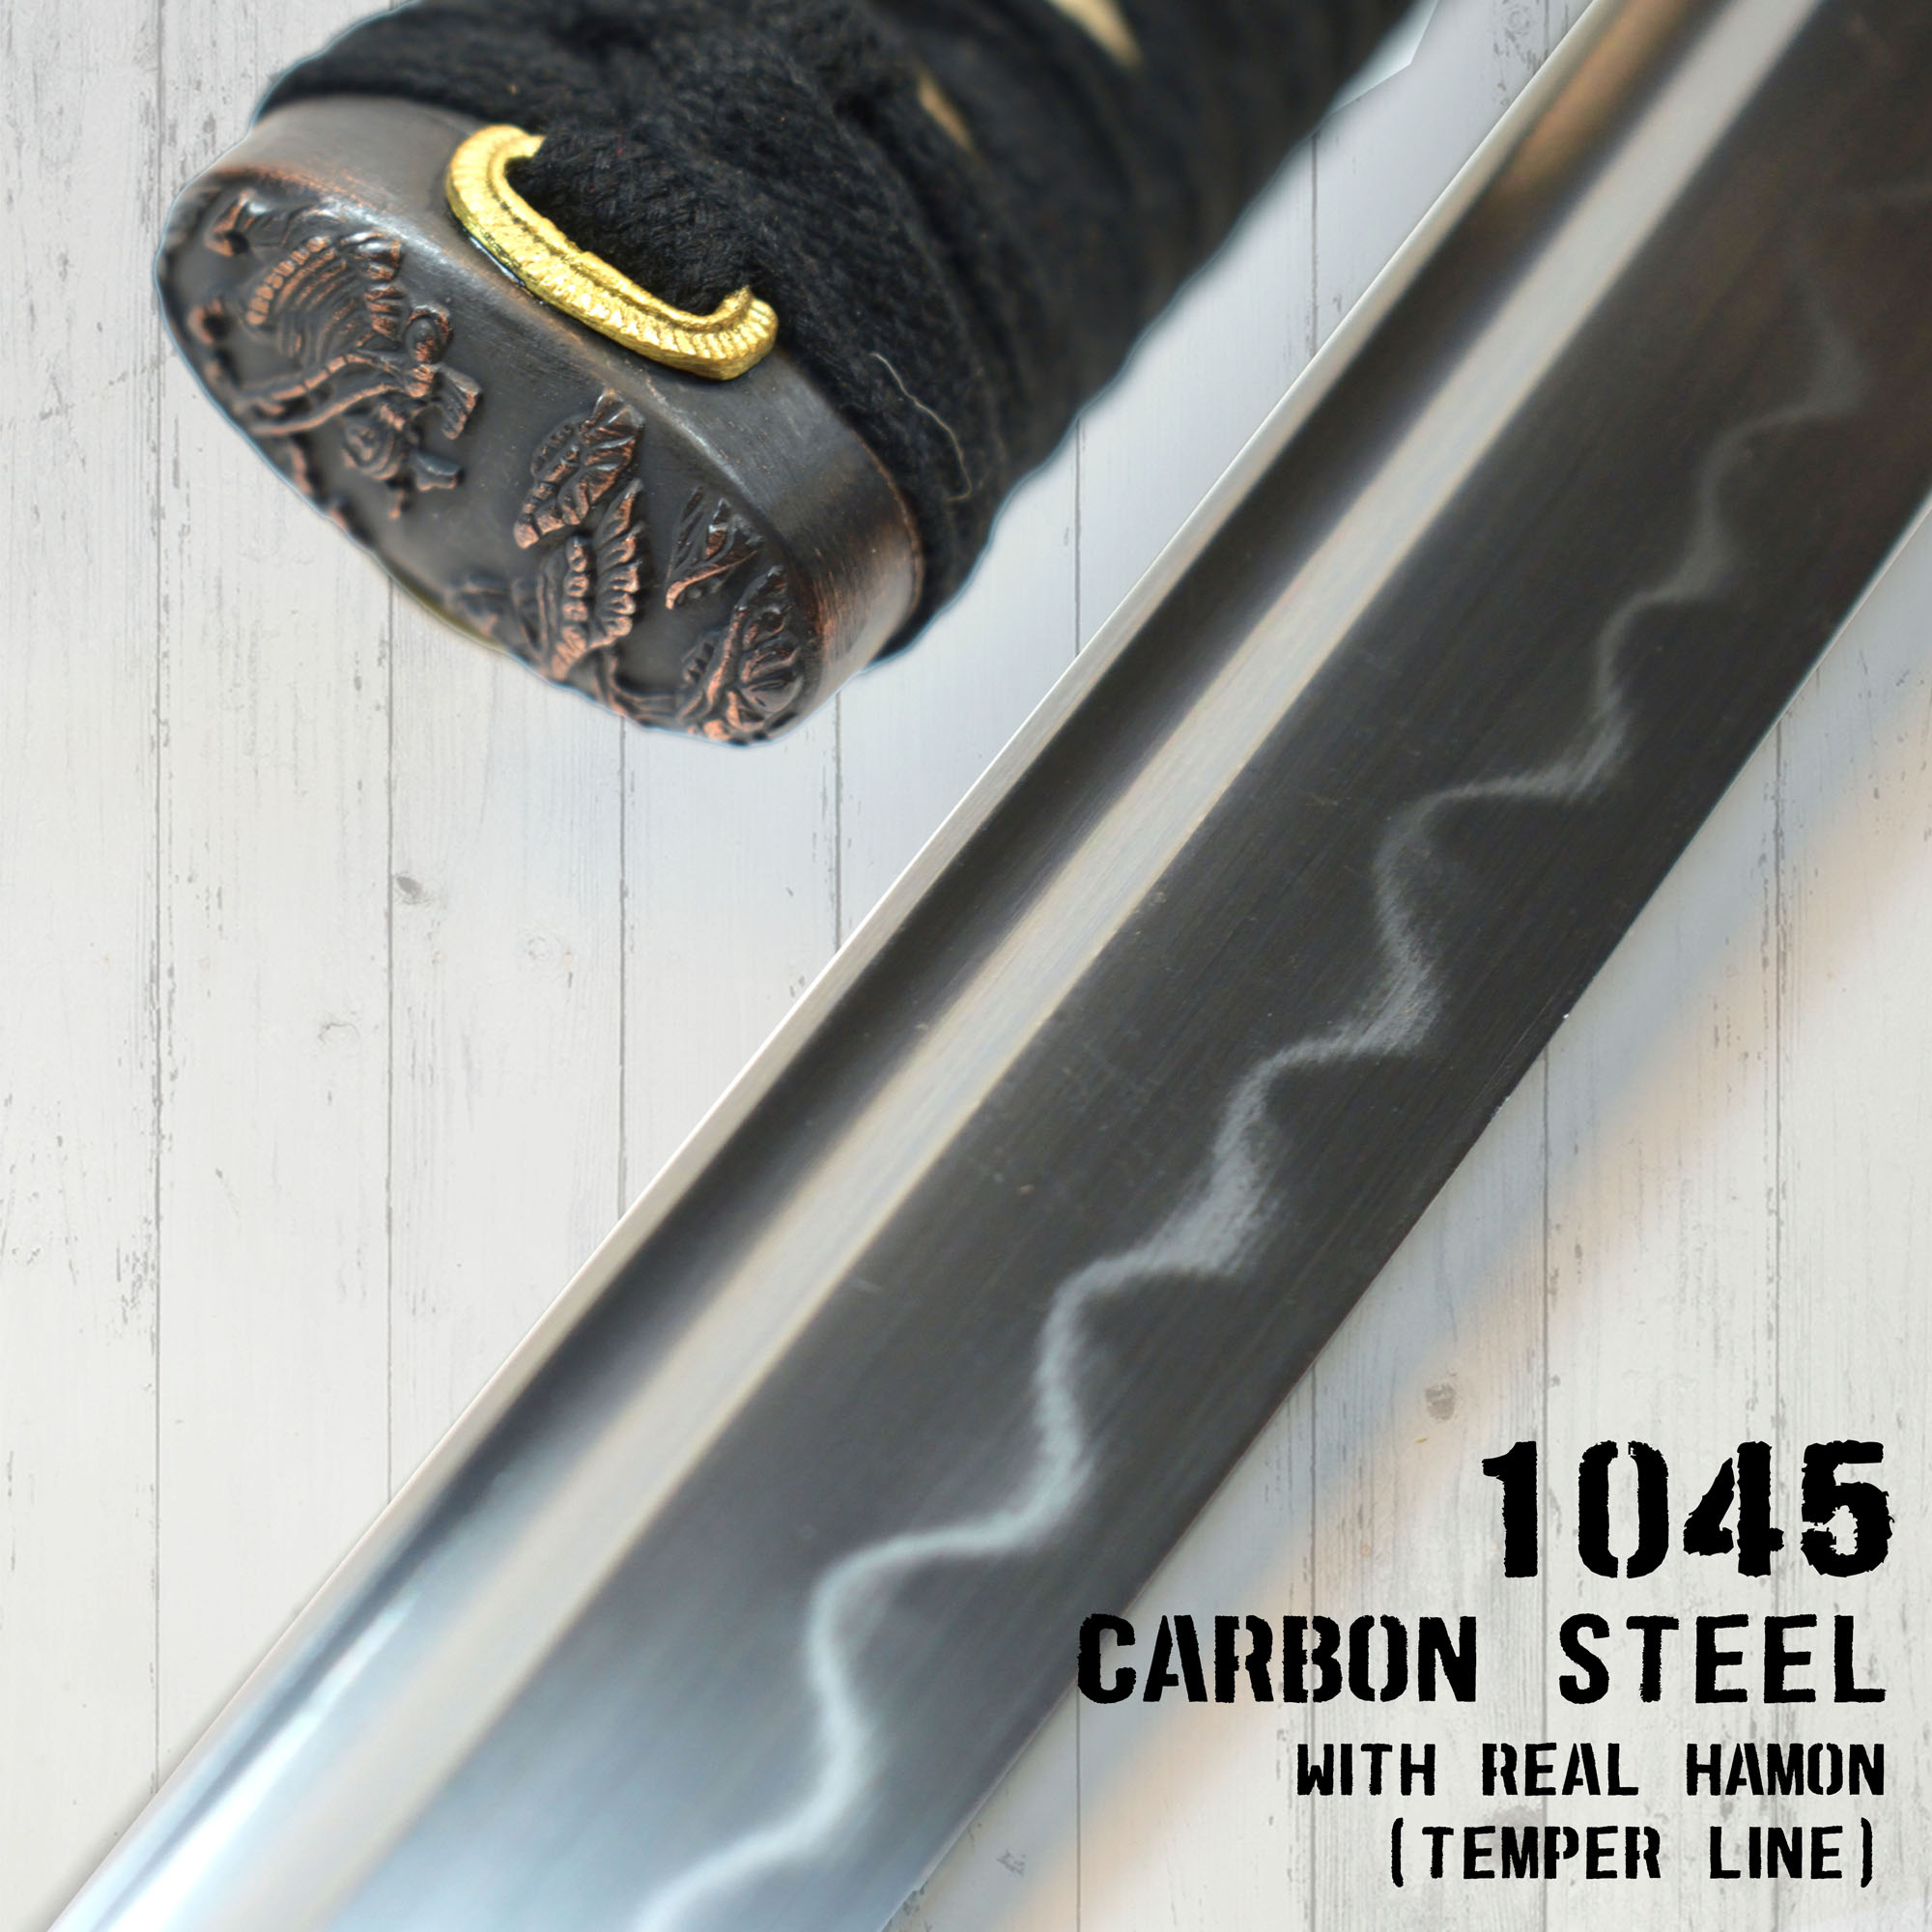 Samurai Complete Set (Akito Katana + Sword Stand + Sword Care Kit)